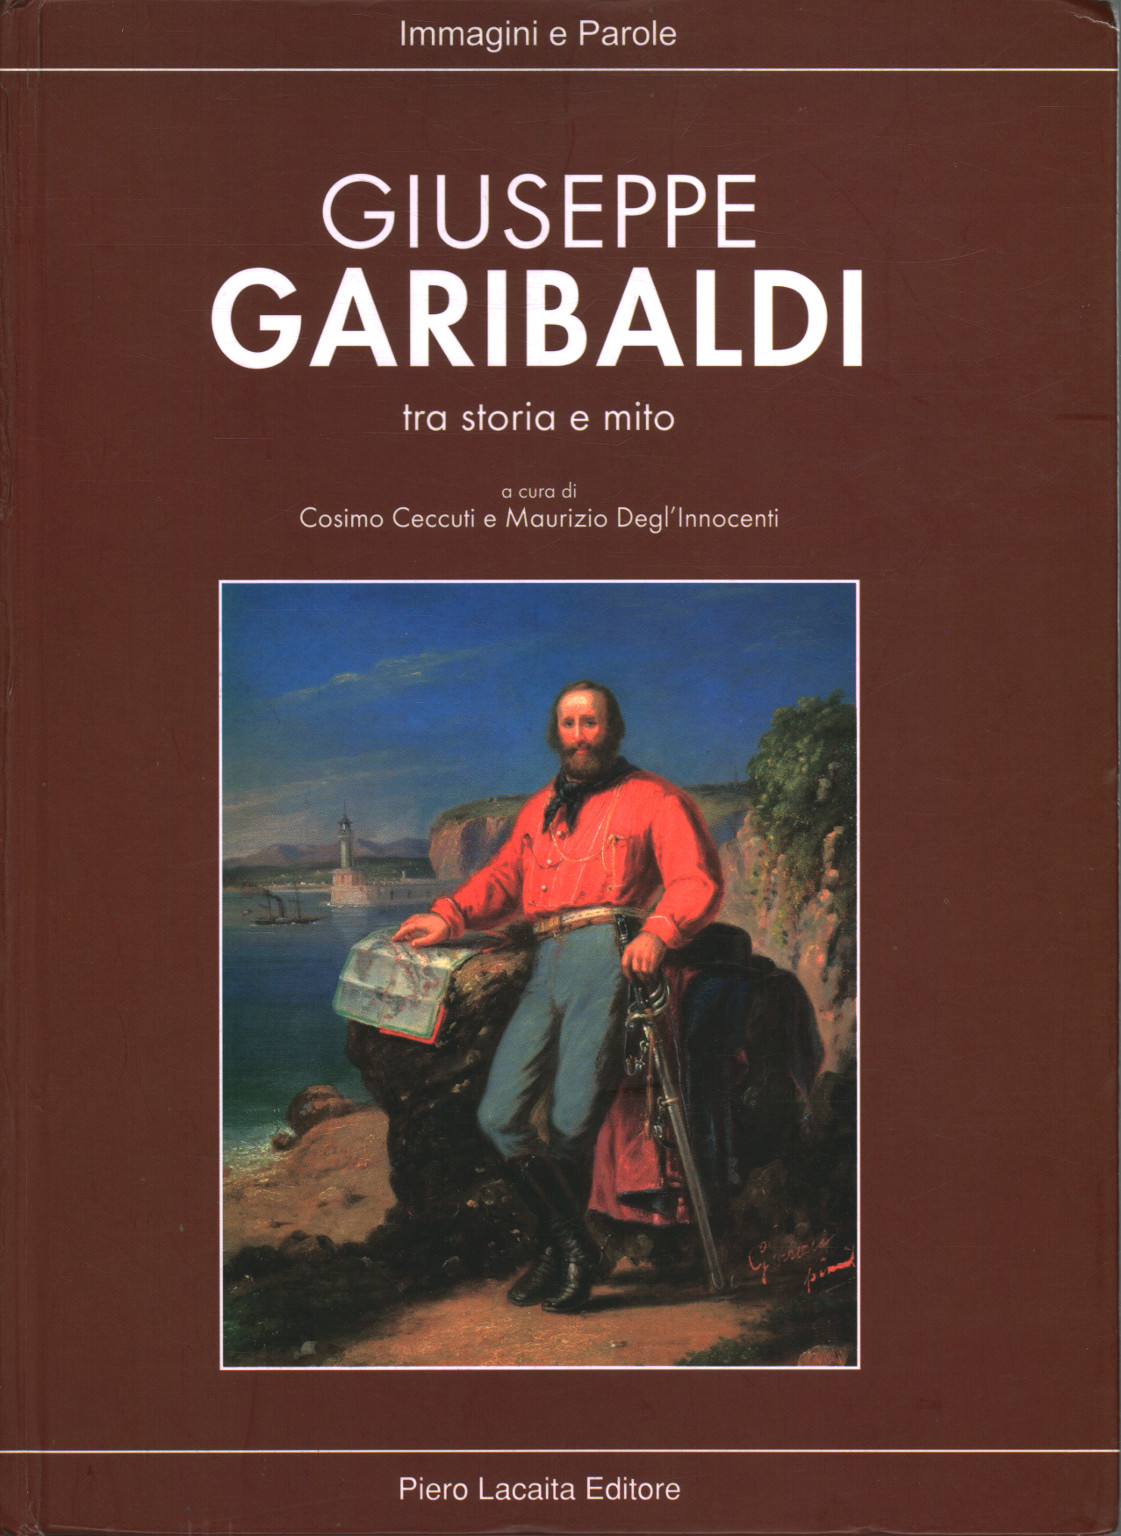 Giuseppe Garibaldi between history and myth, s.a.